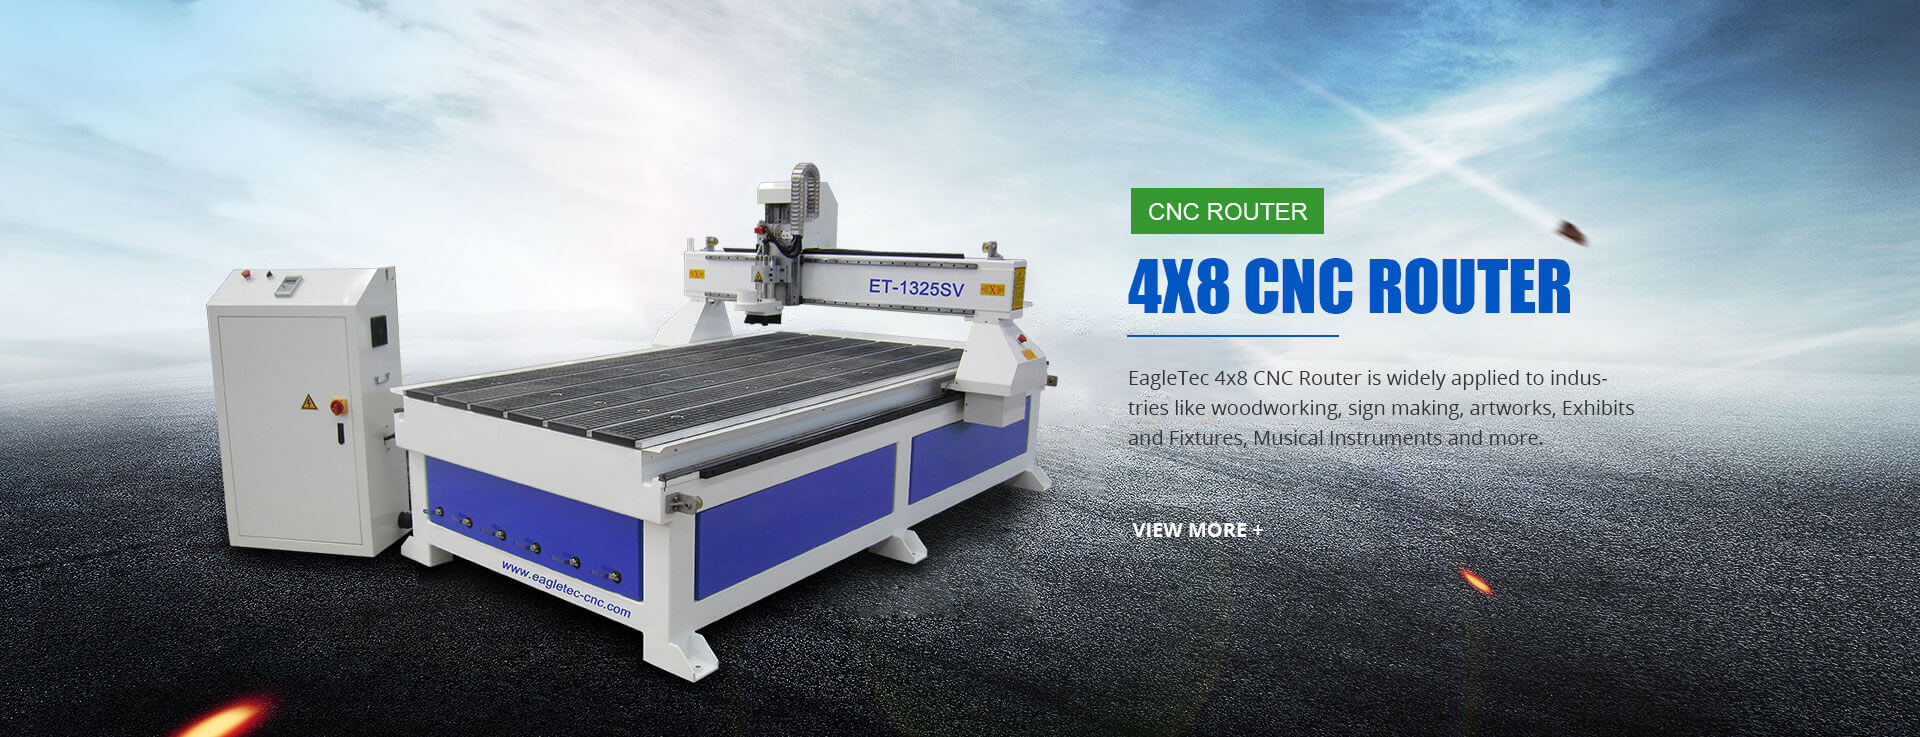 CNC Router for Metal Cutting 4040 4 Axis Atc CNC Machine - China CNC  Engraving Machine, Automatic